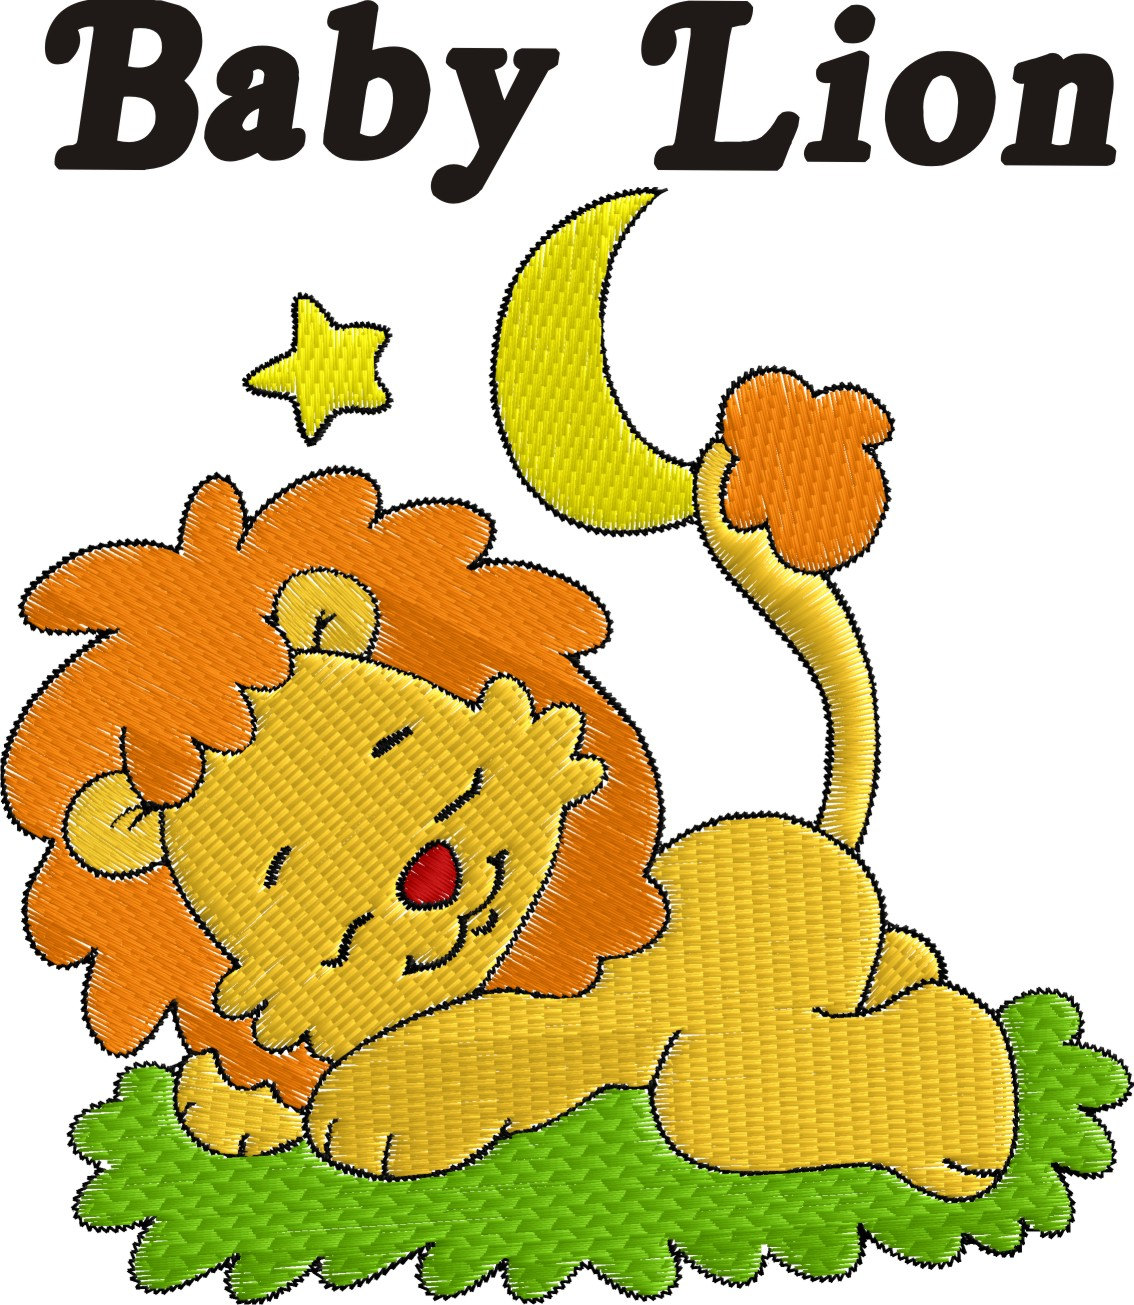 Baby lion the lion king clip art image